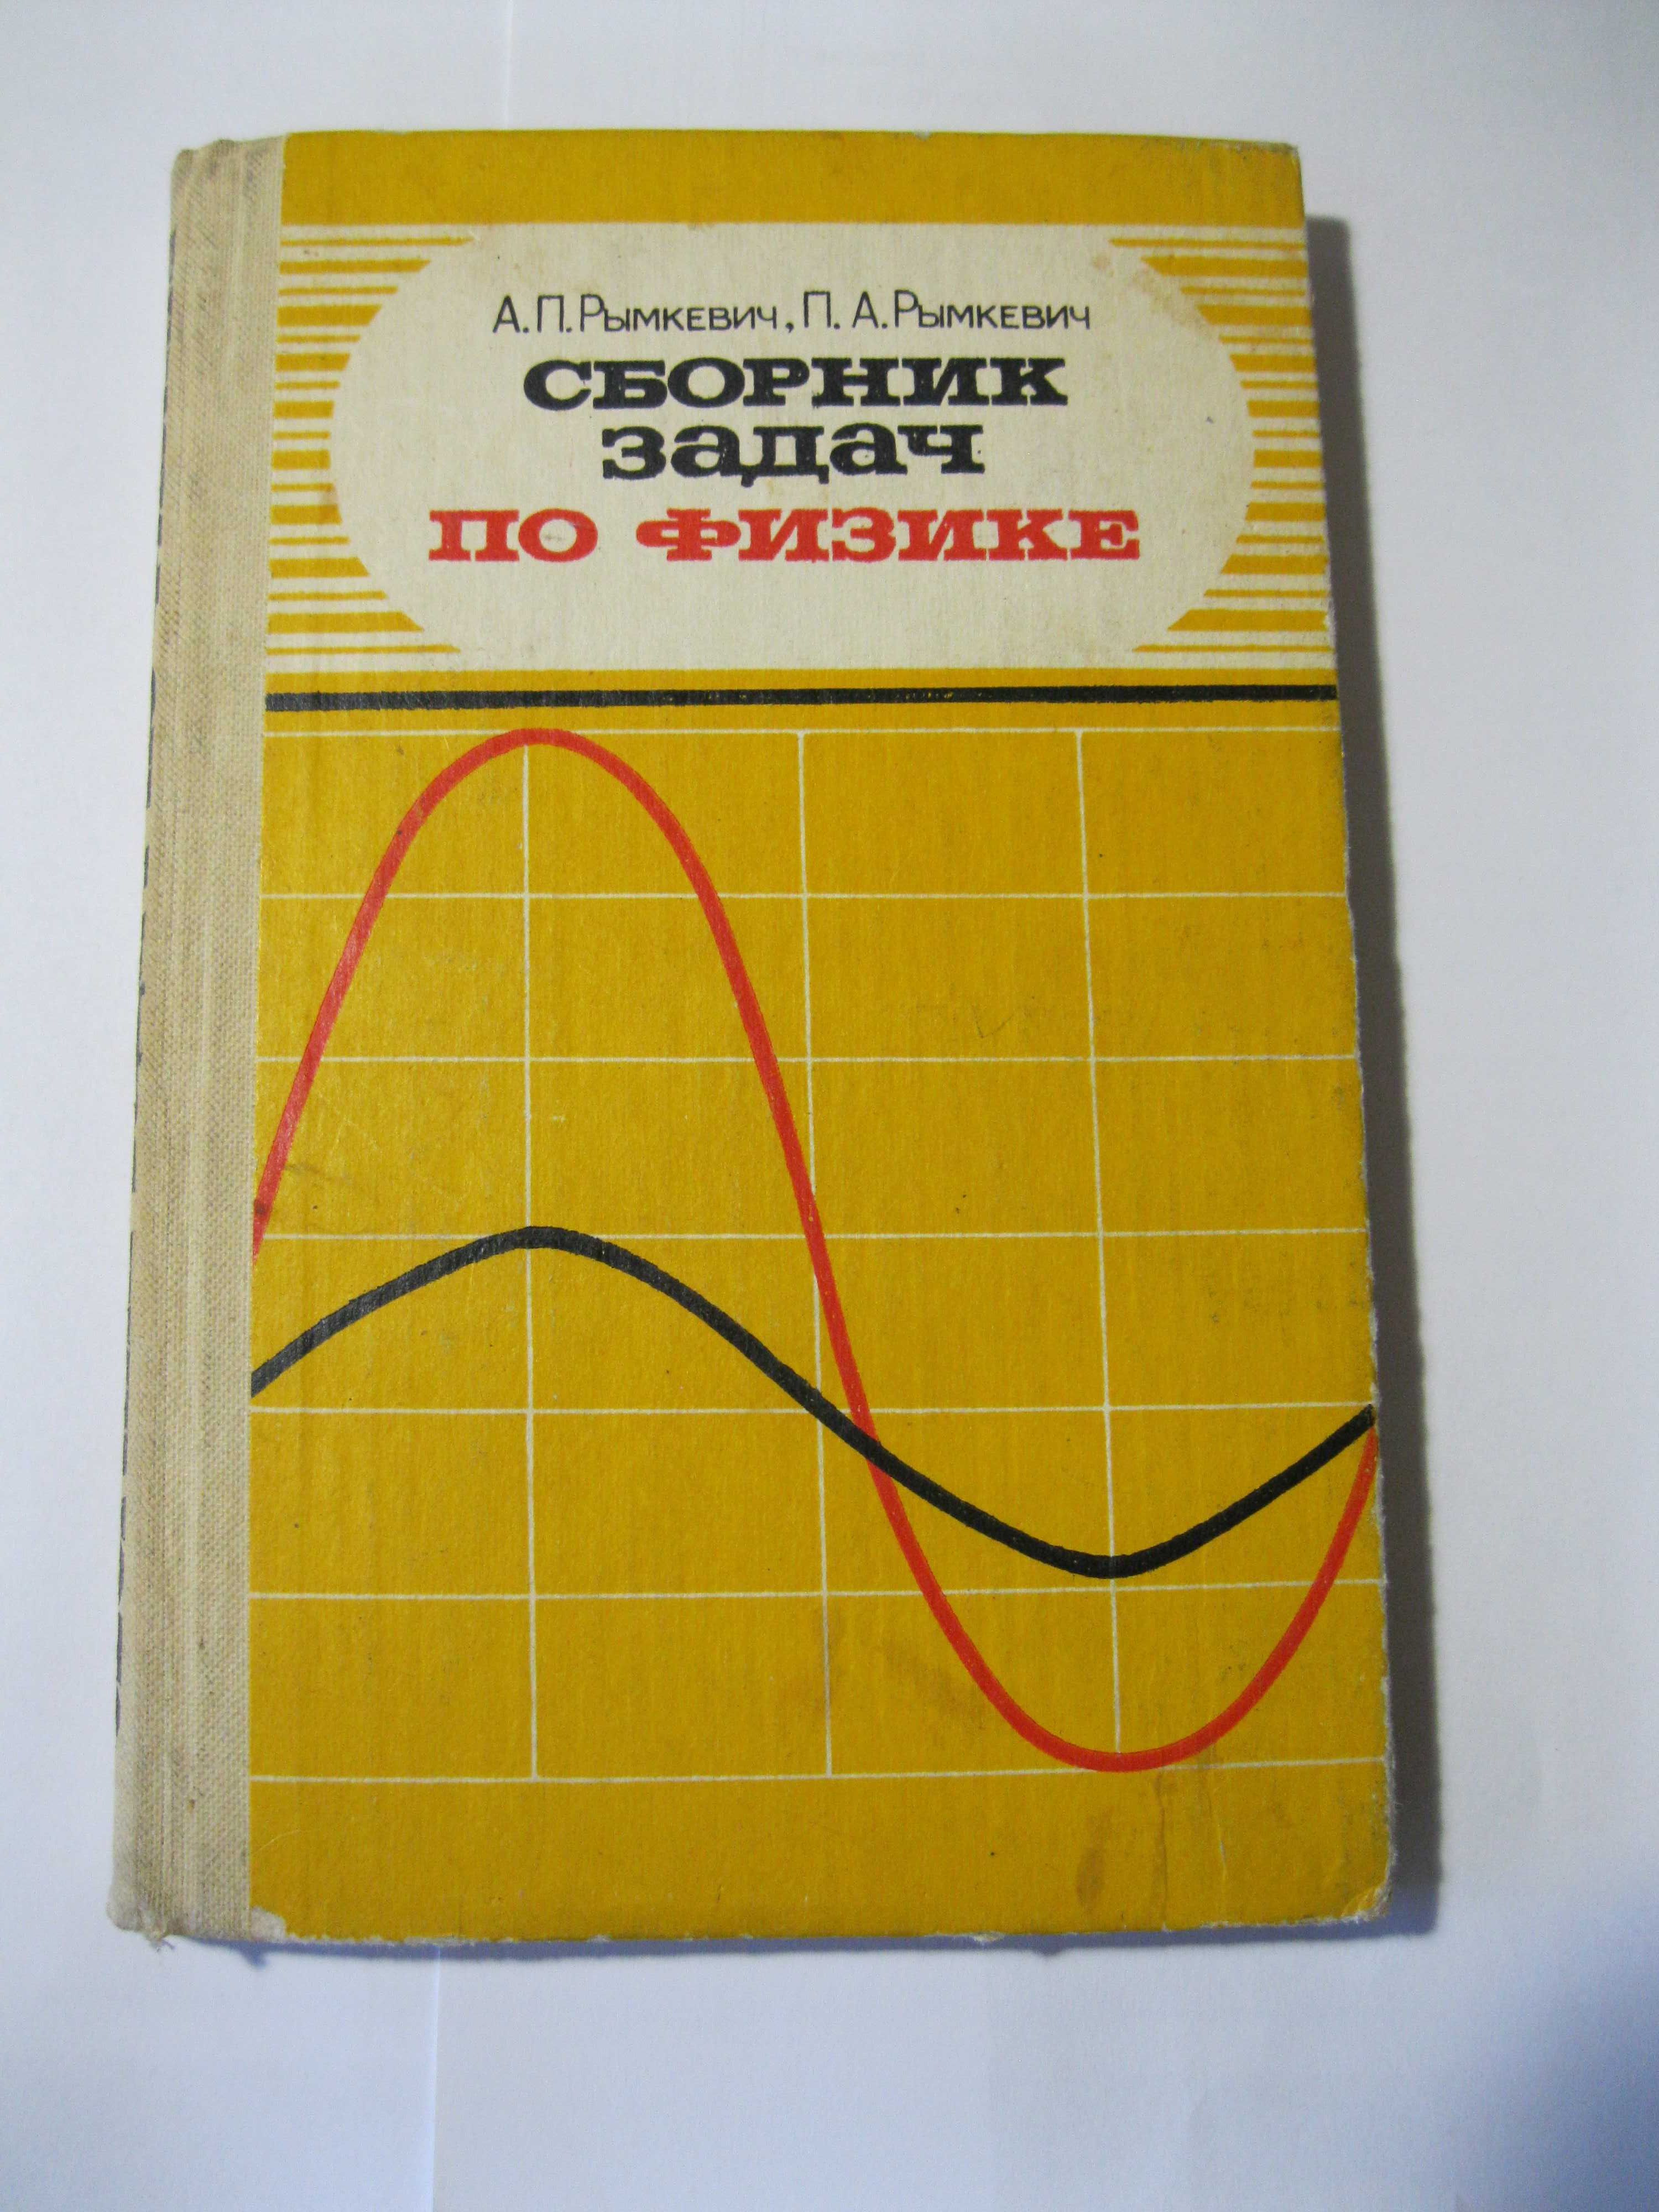 Рымкевич Сборник задач по физике